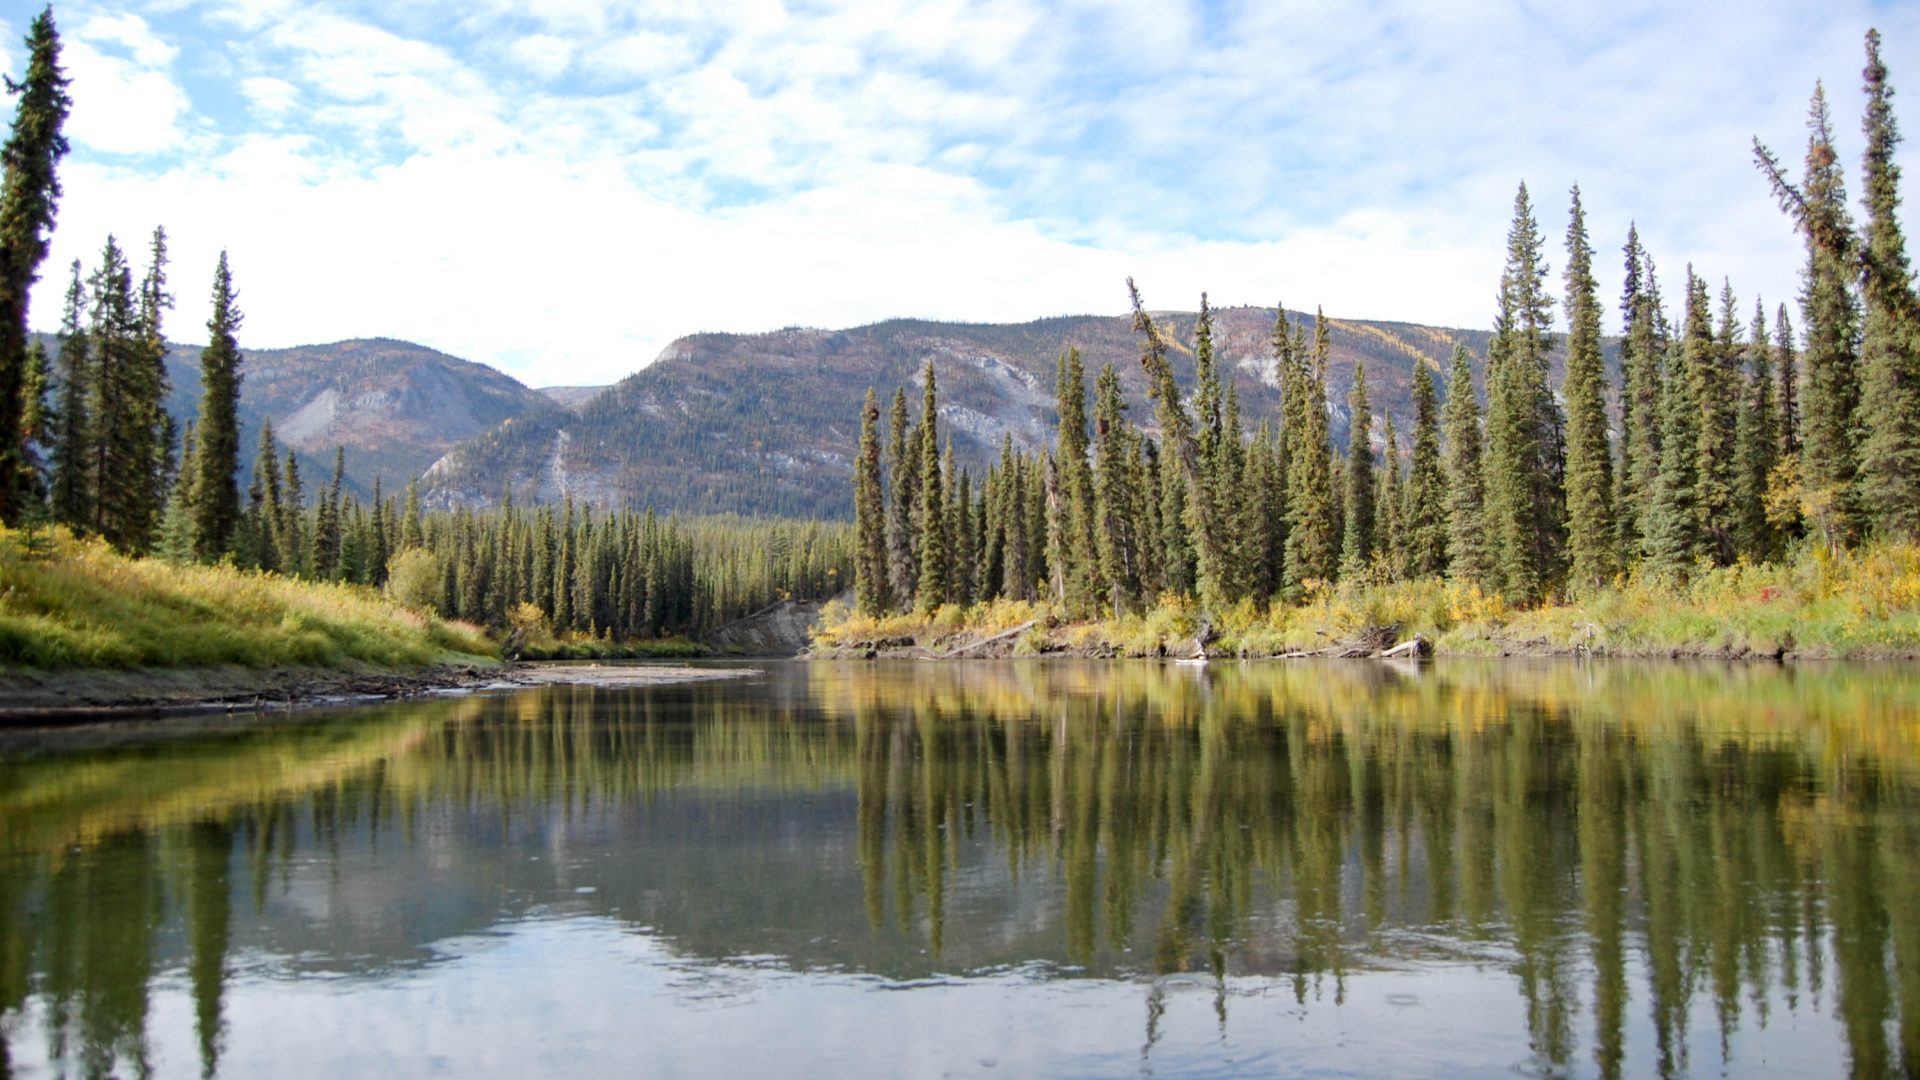 The Klondiker - Big Salmon River - mirroring